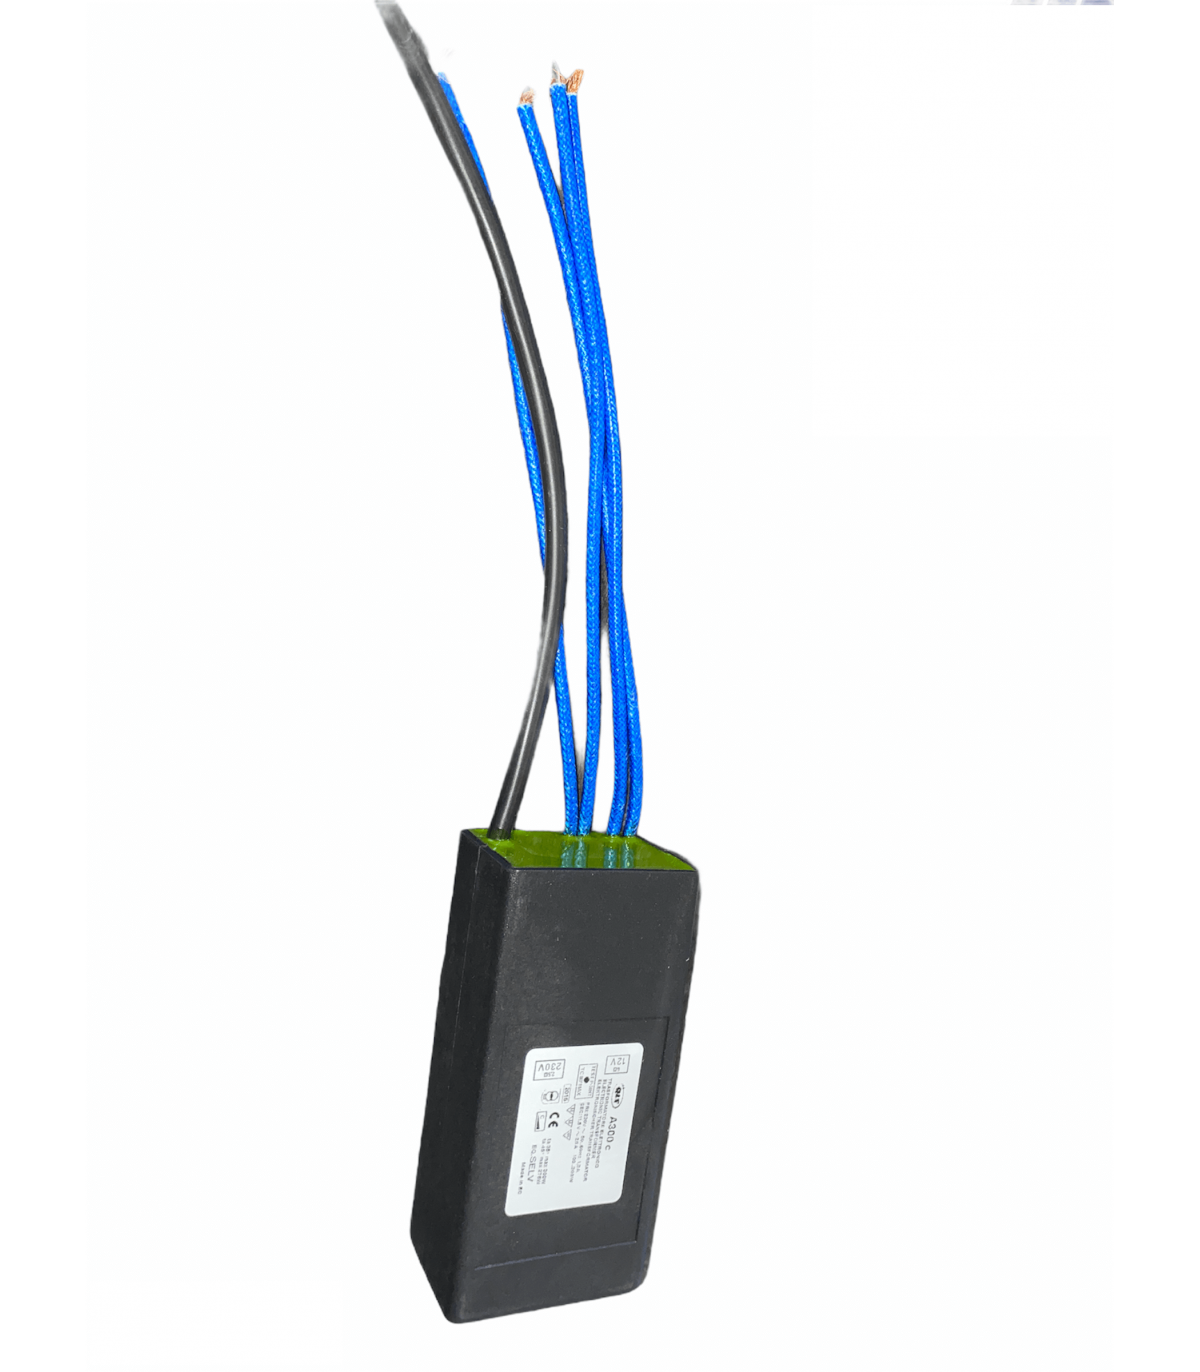 Transformateur câblé LED et halogène TBT 230v-12v 60Va dimmable